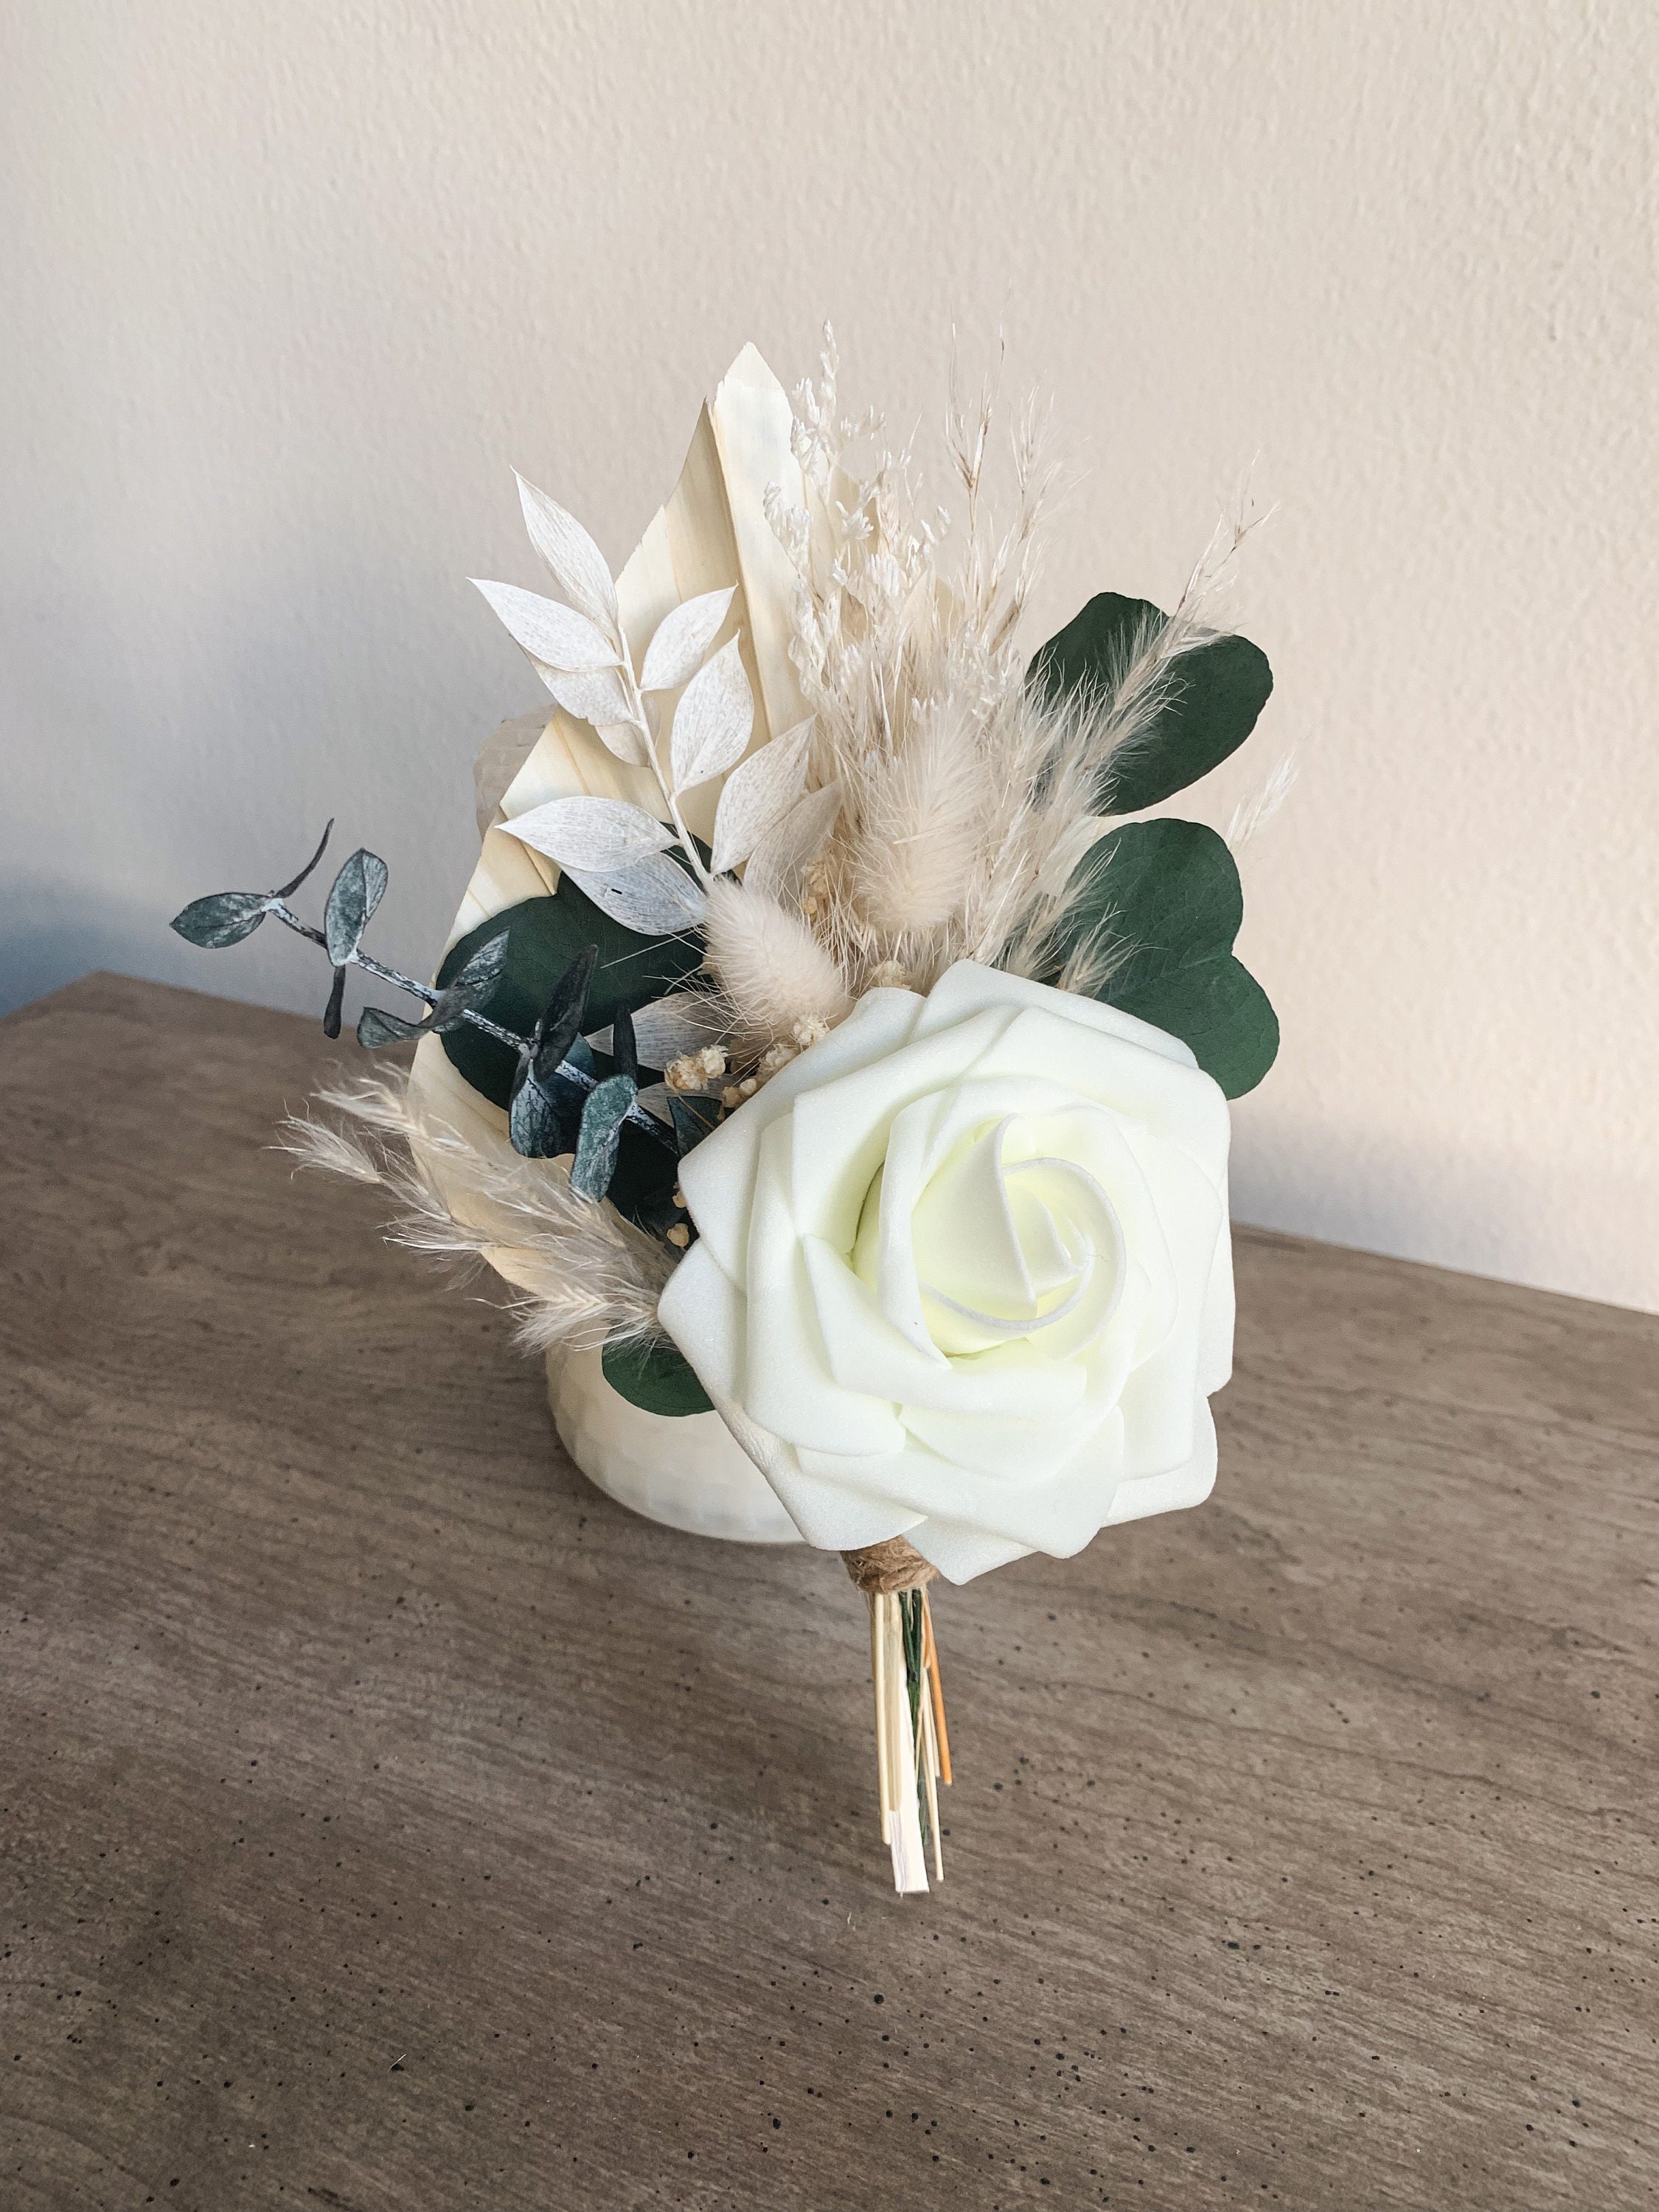 Edible Flowers, Wafer Paper Flowers for Cakes Modern White Roses